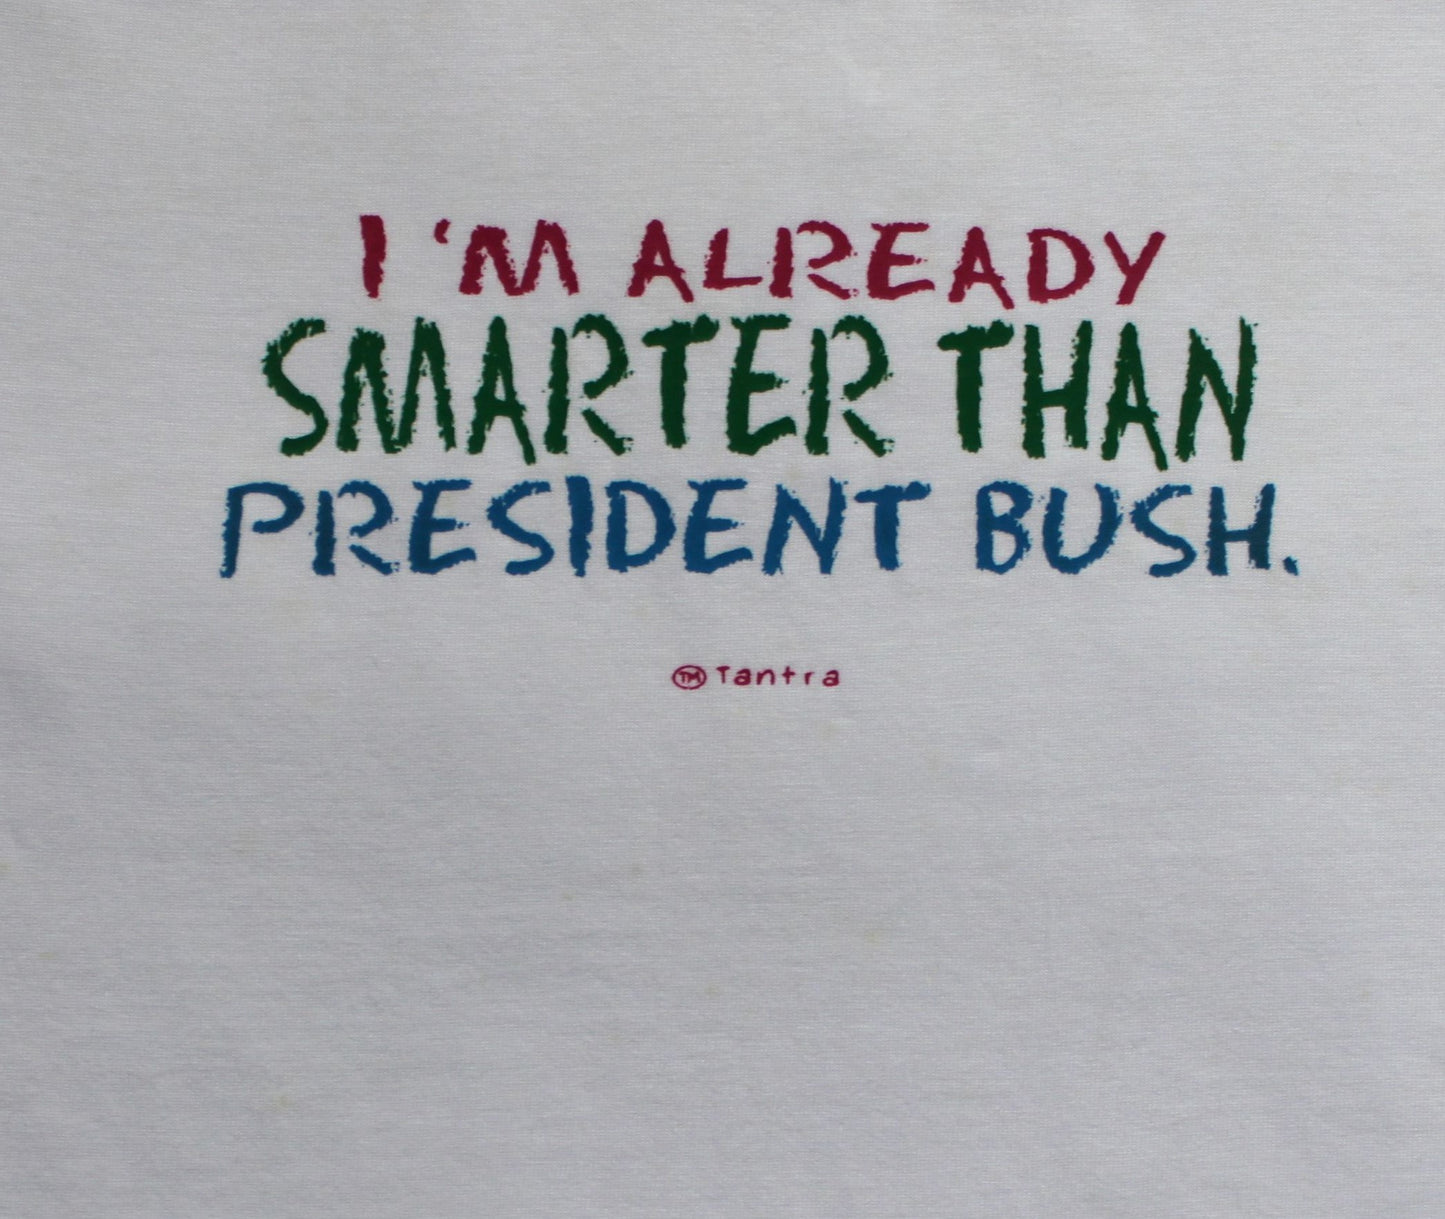 Smart/Bush